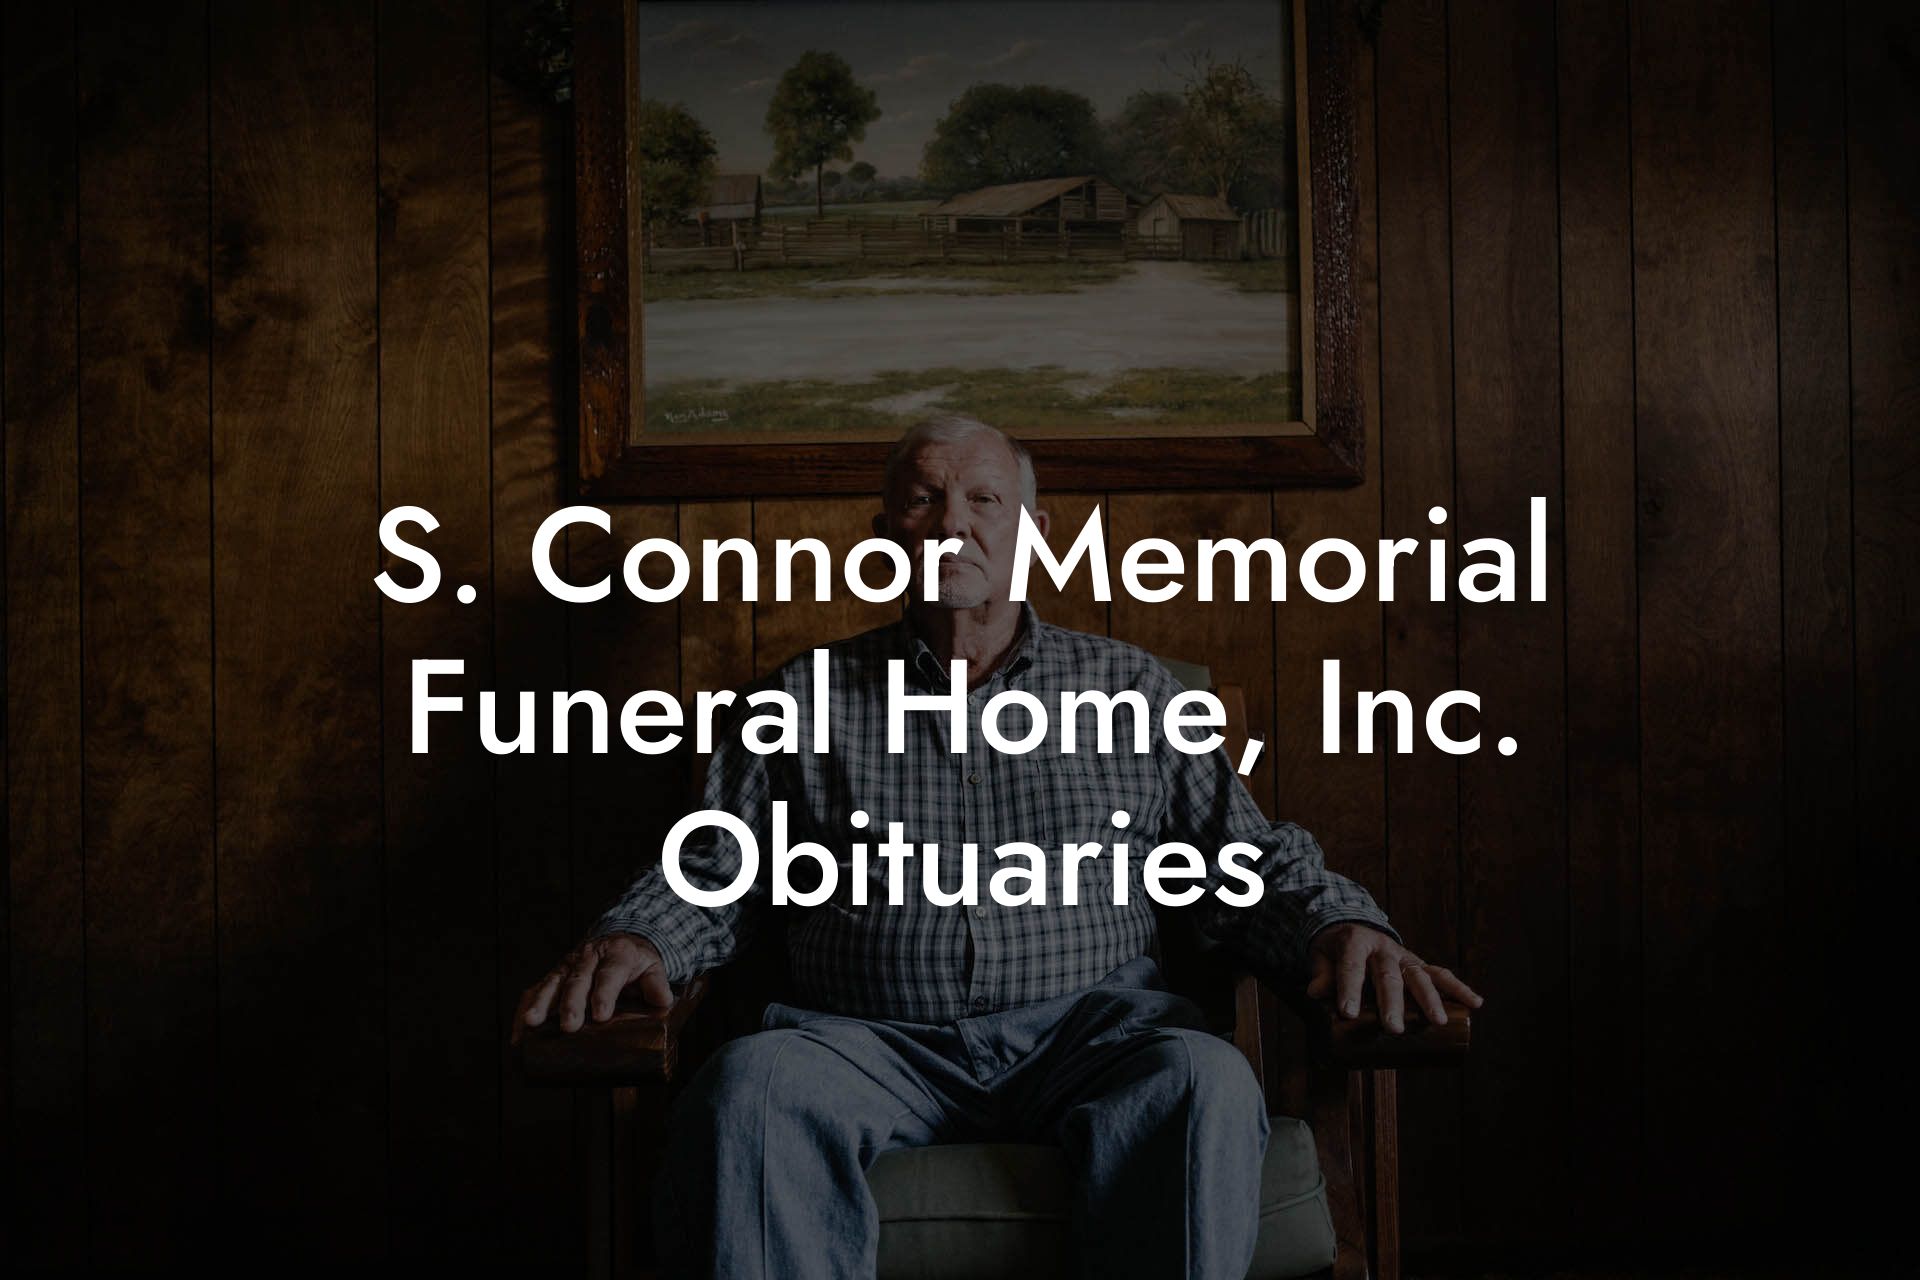 S. Connor Memorial Funeral Home, Inc. Obituaries